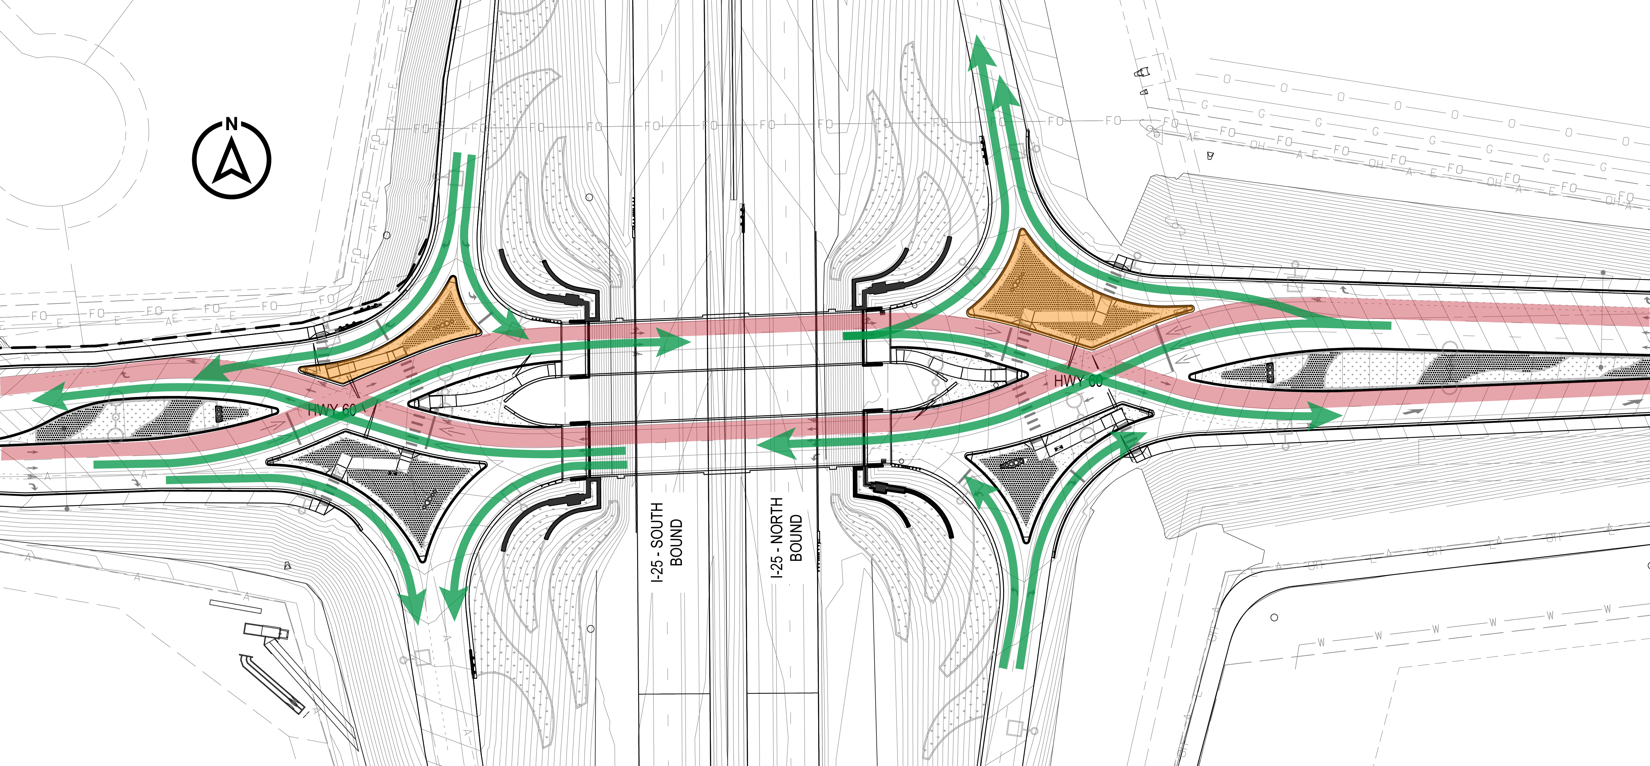 Diverging Diamon interchange I-25 North Express Lanes project map rendering detail image